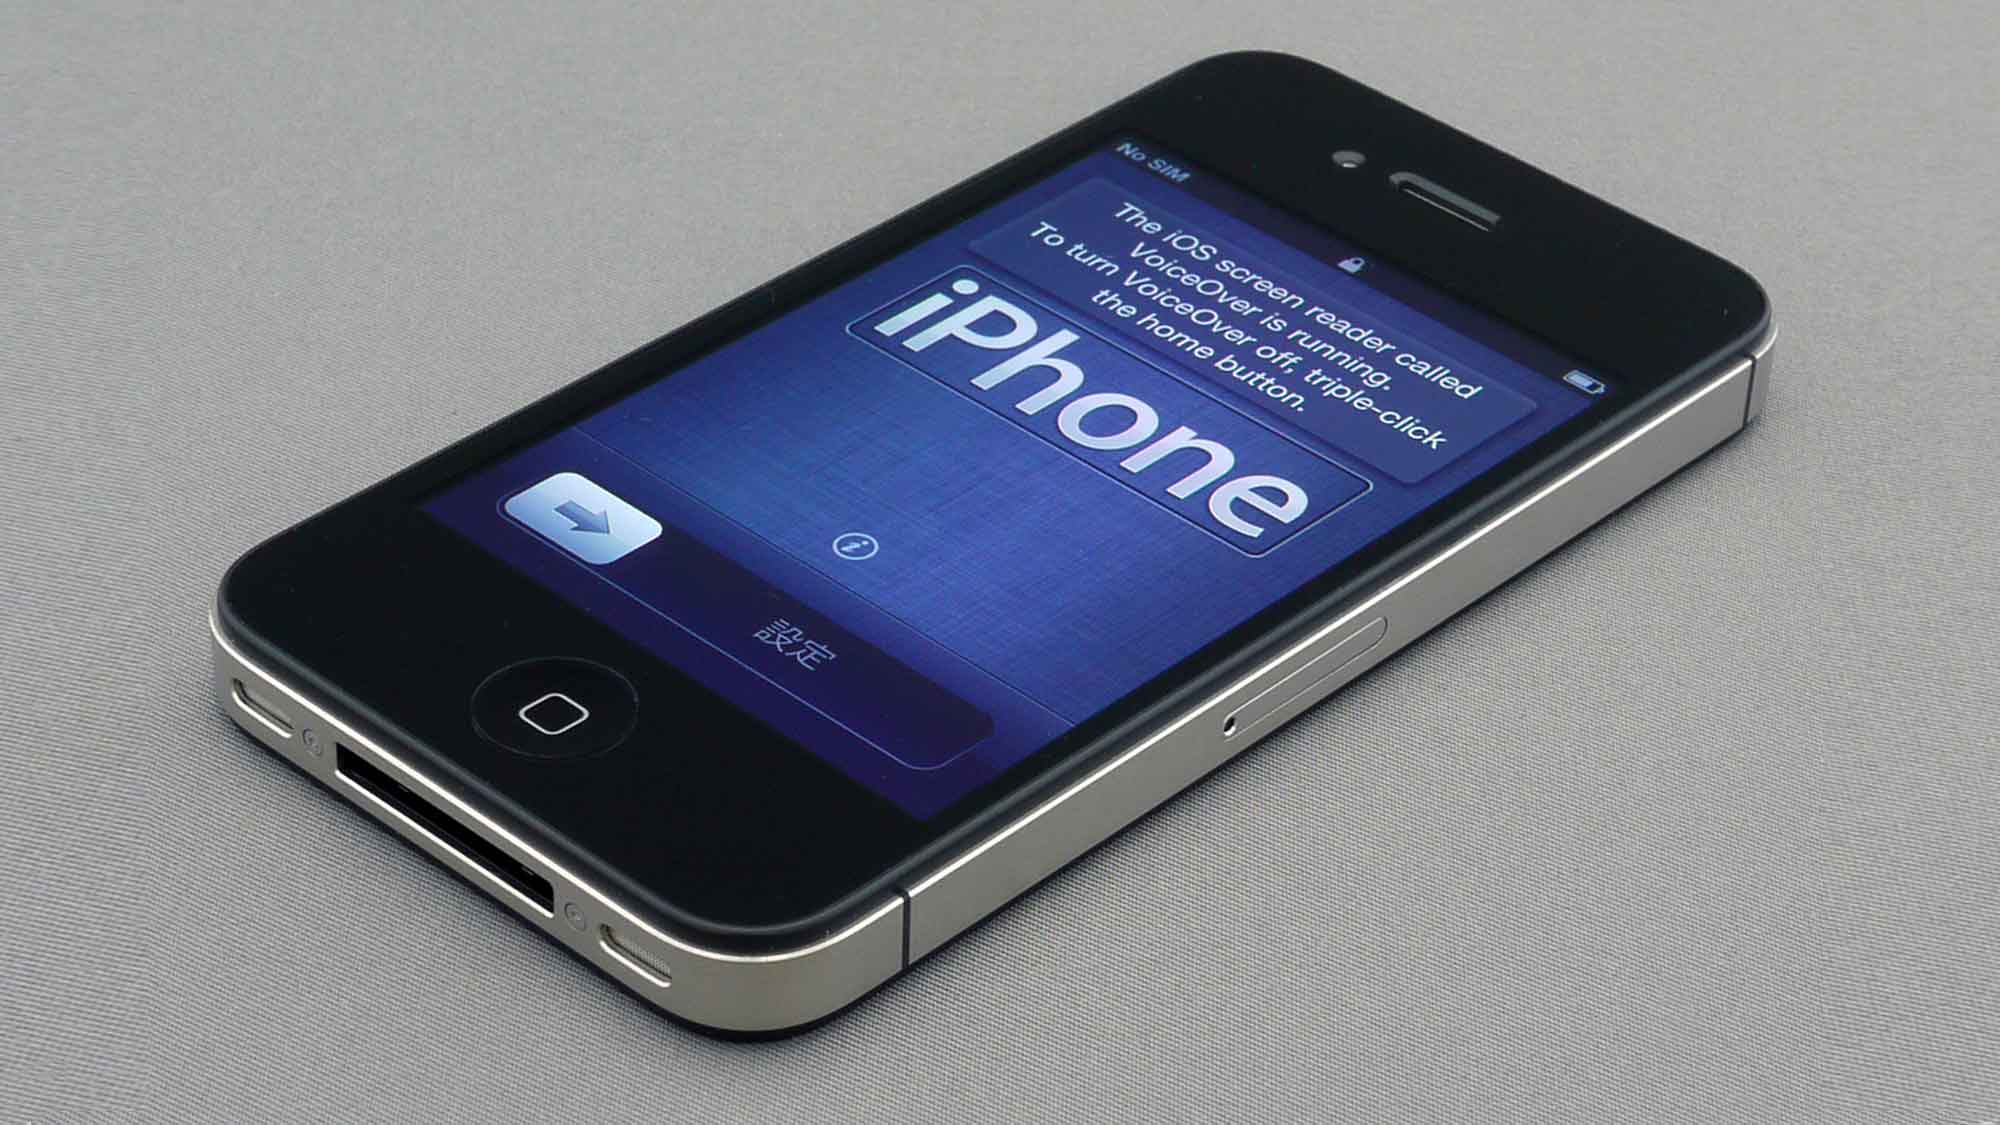 Rumor: iPhone 5 Announcement Coming In September (2011)